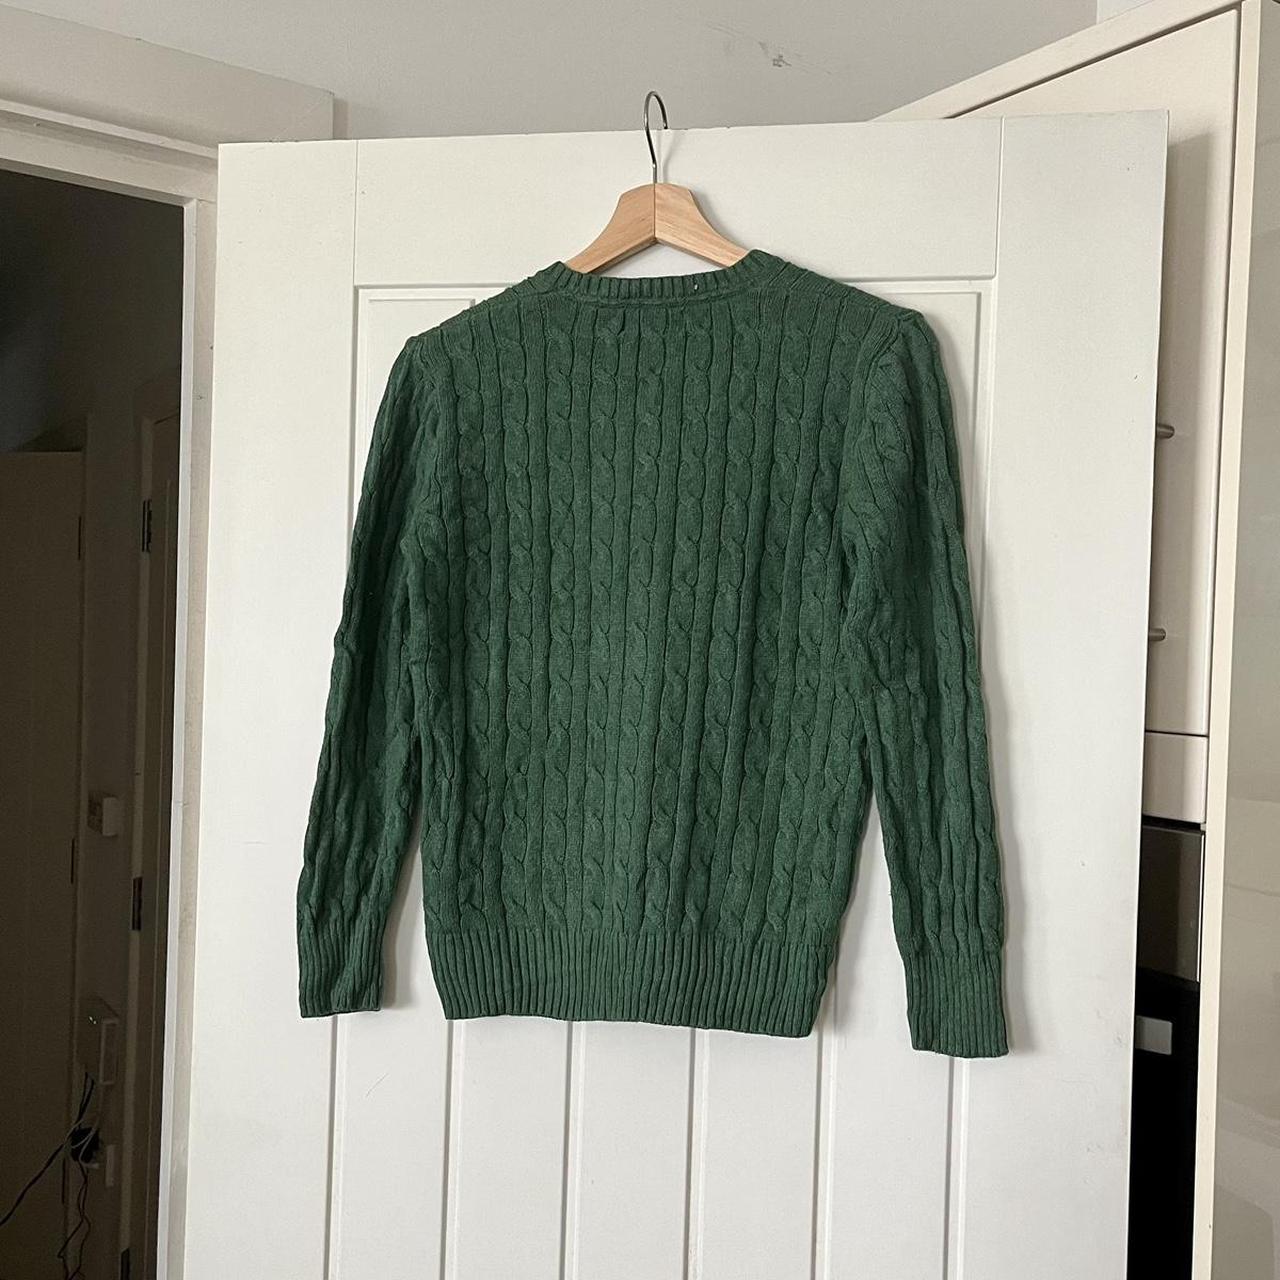 The cutest Ralph Lauren cable knit jumper in green -... - Depop